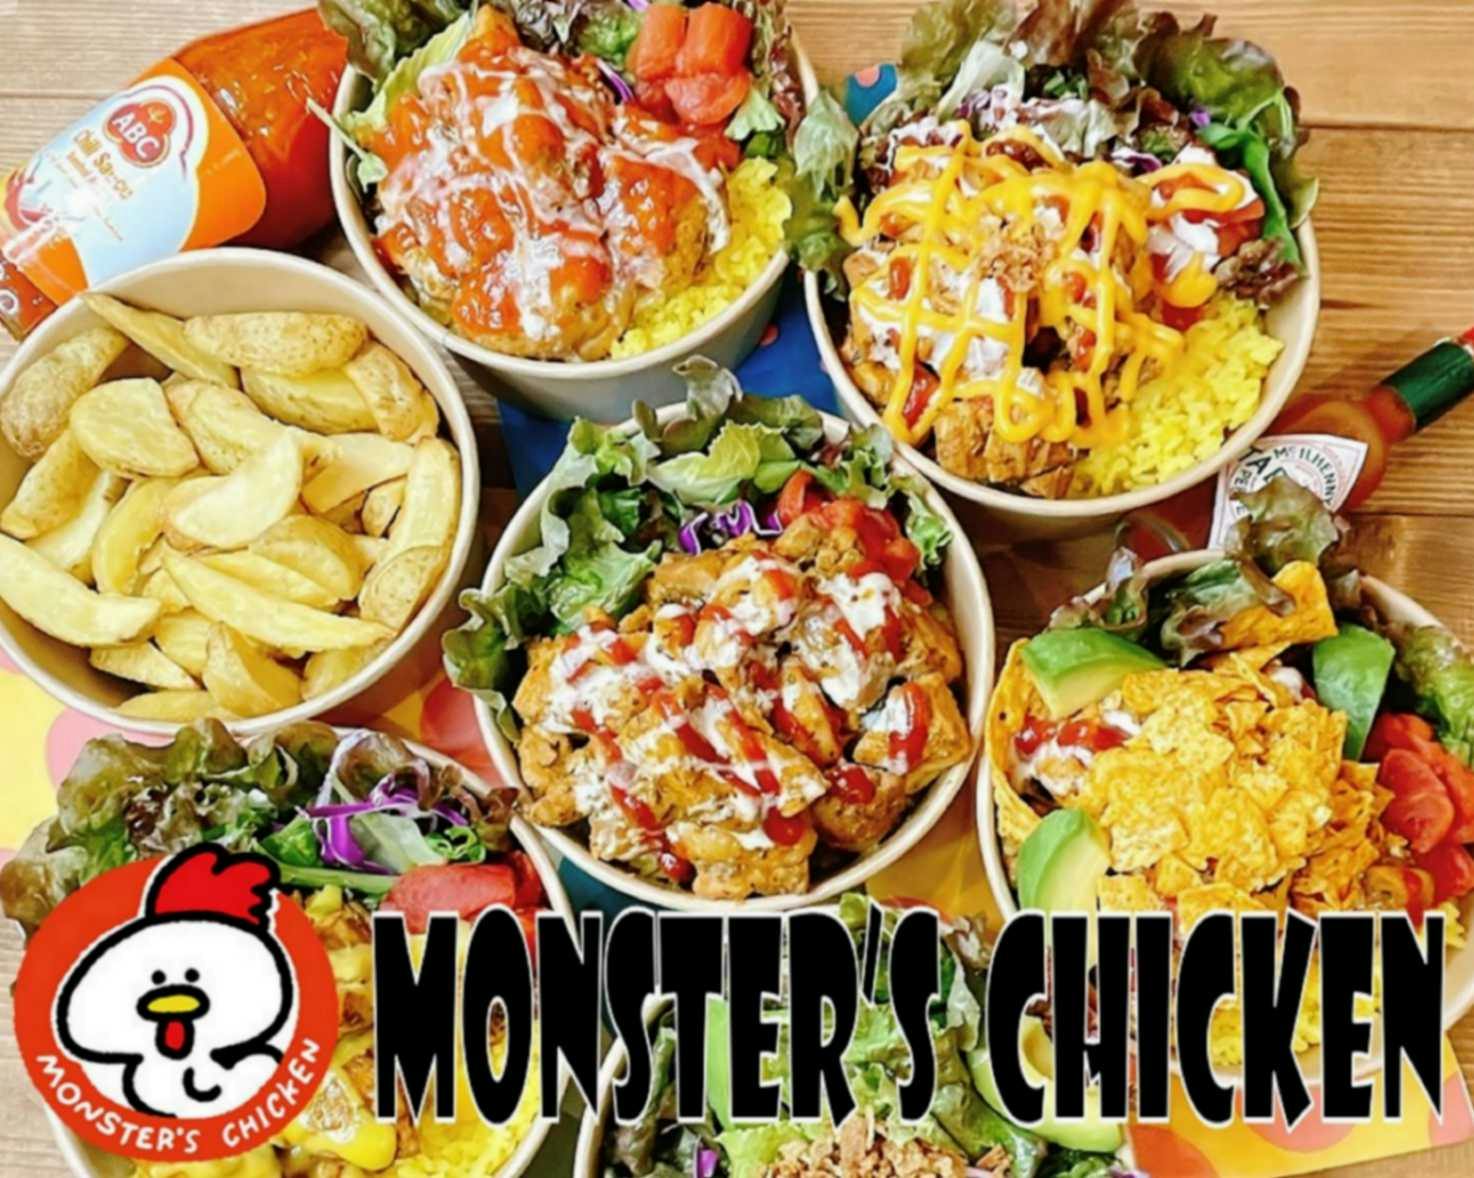 Monster's Chicken (モンスターズ チキン)